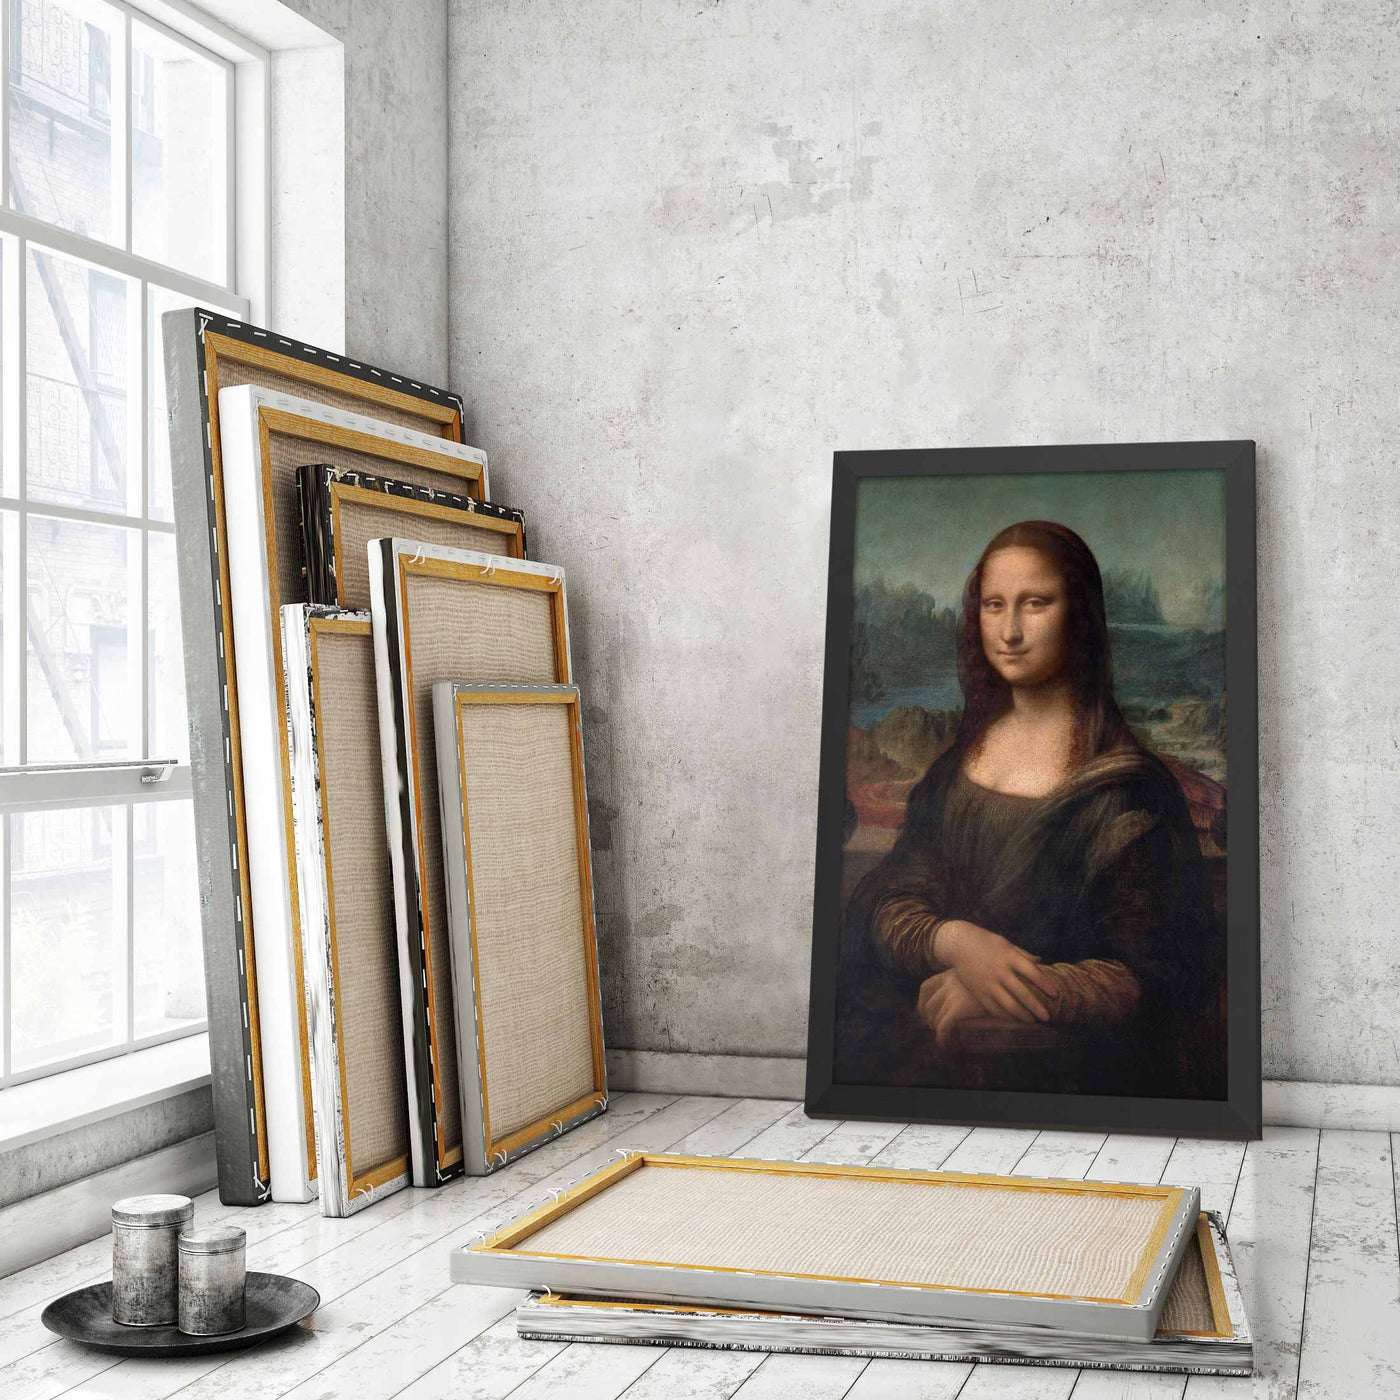 The Mona Lisa by Leonardo da Vinci, 1503